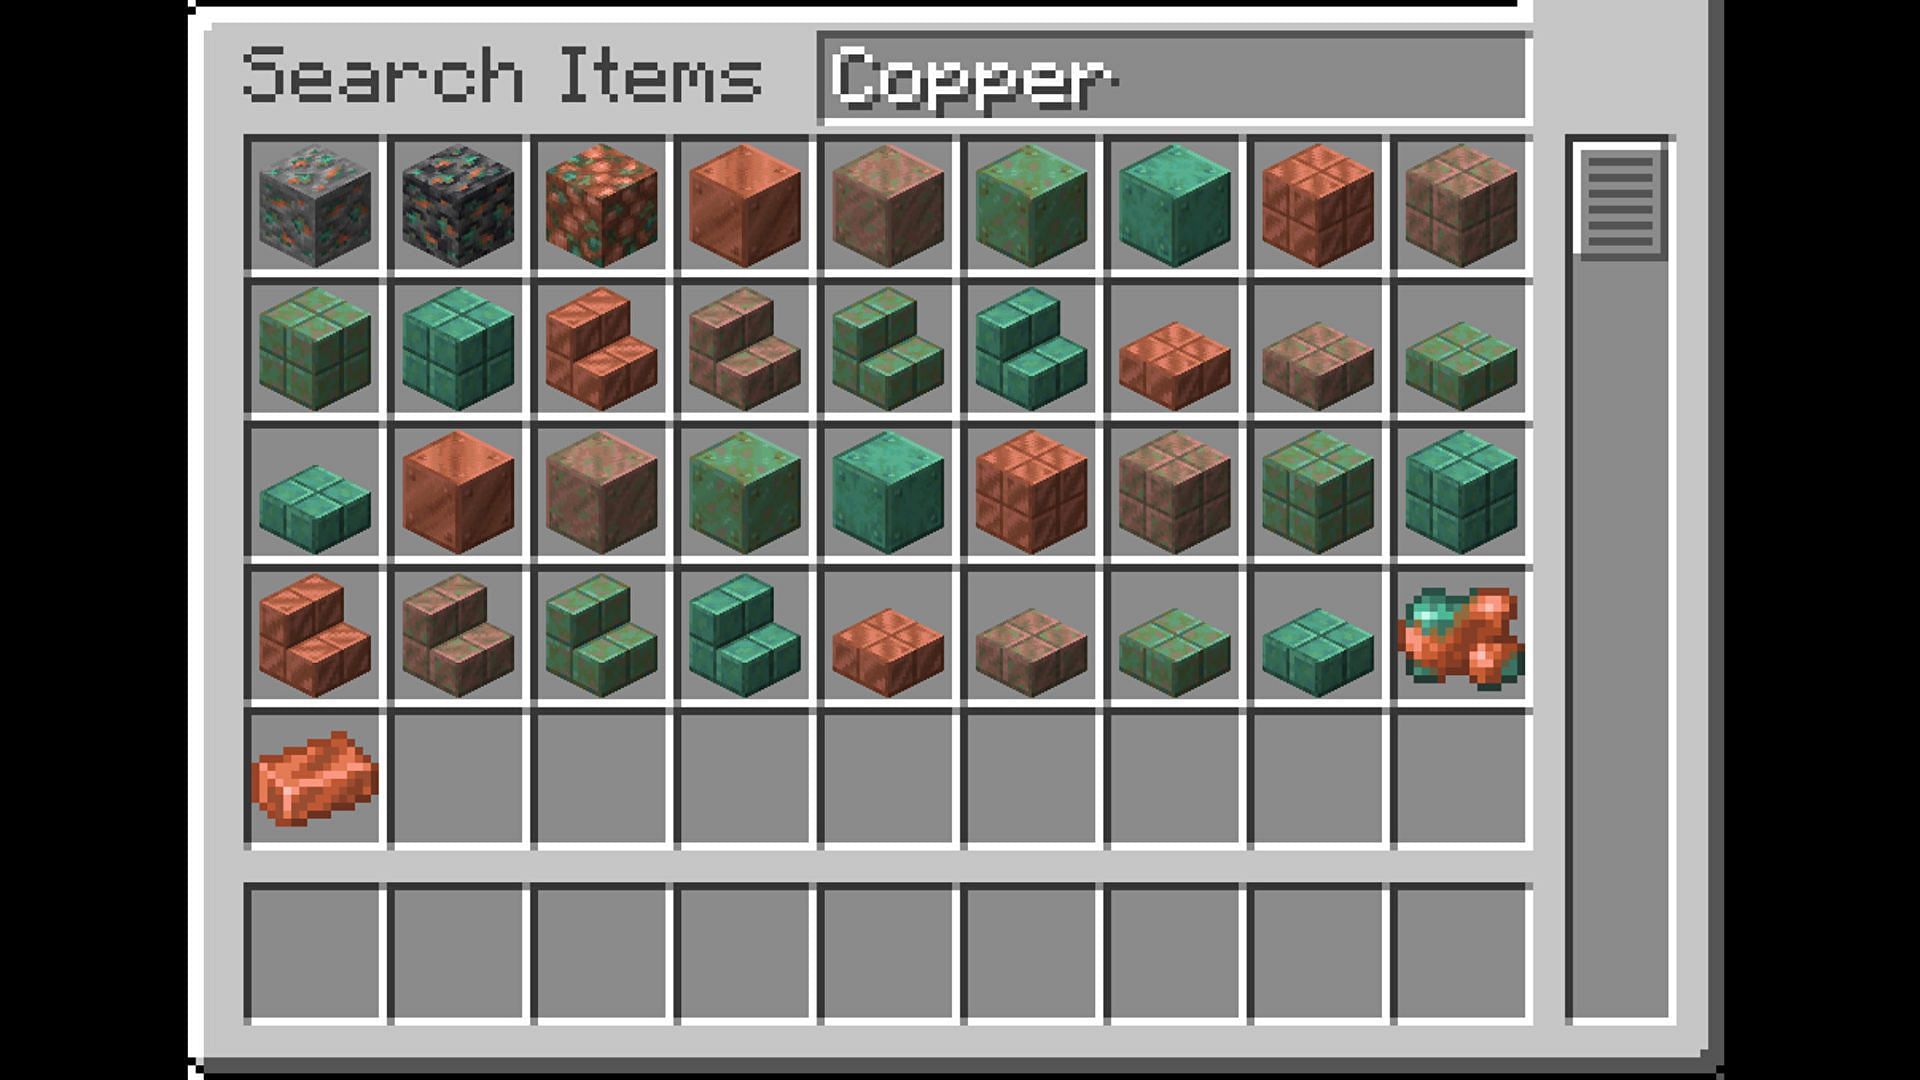 Every type of copper block in Minecraft (Image via Minecraft)